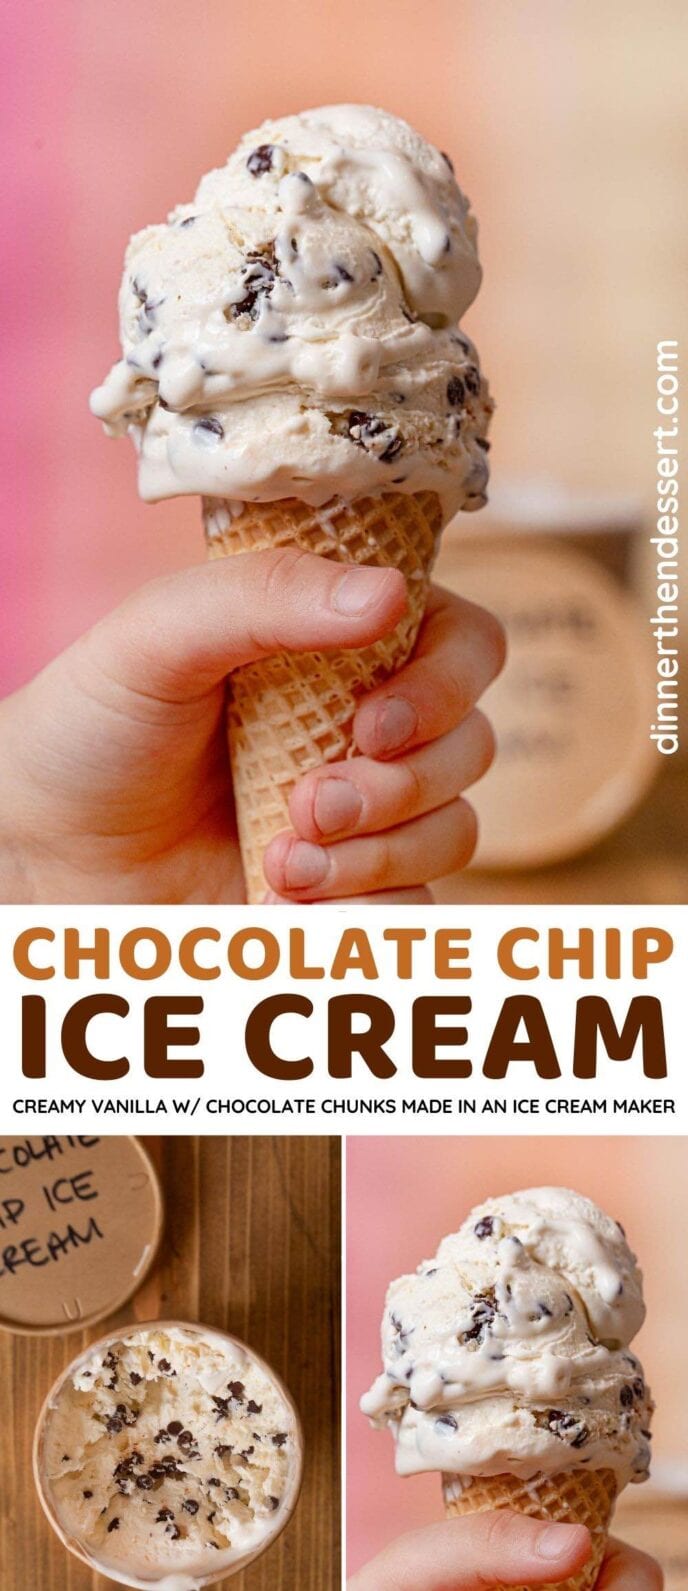 Chocolate Chip Ice Cream collage